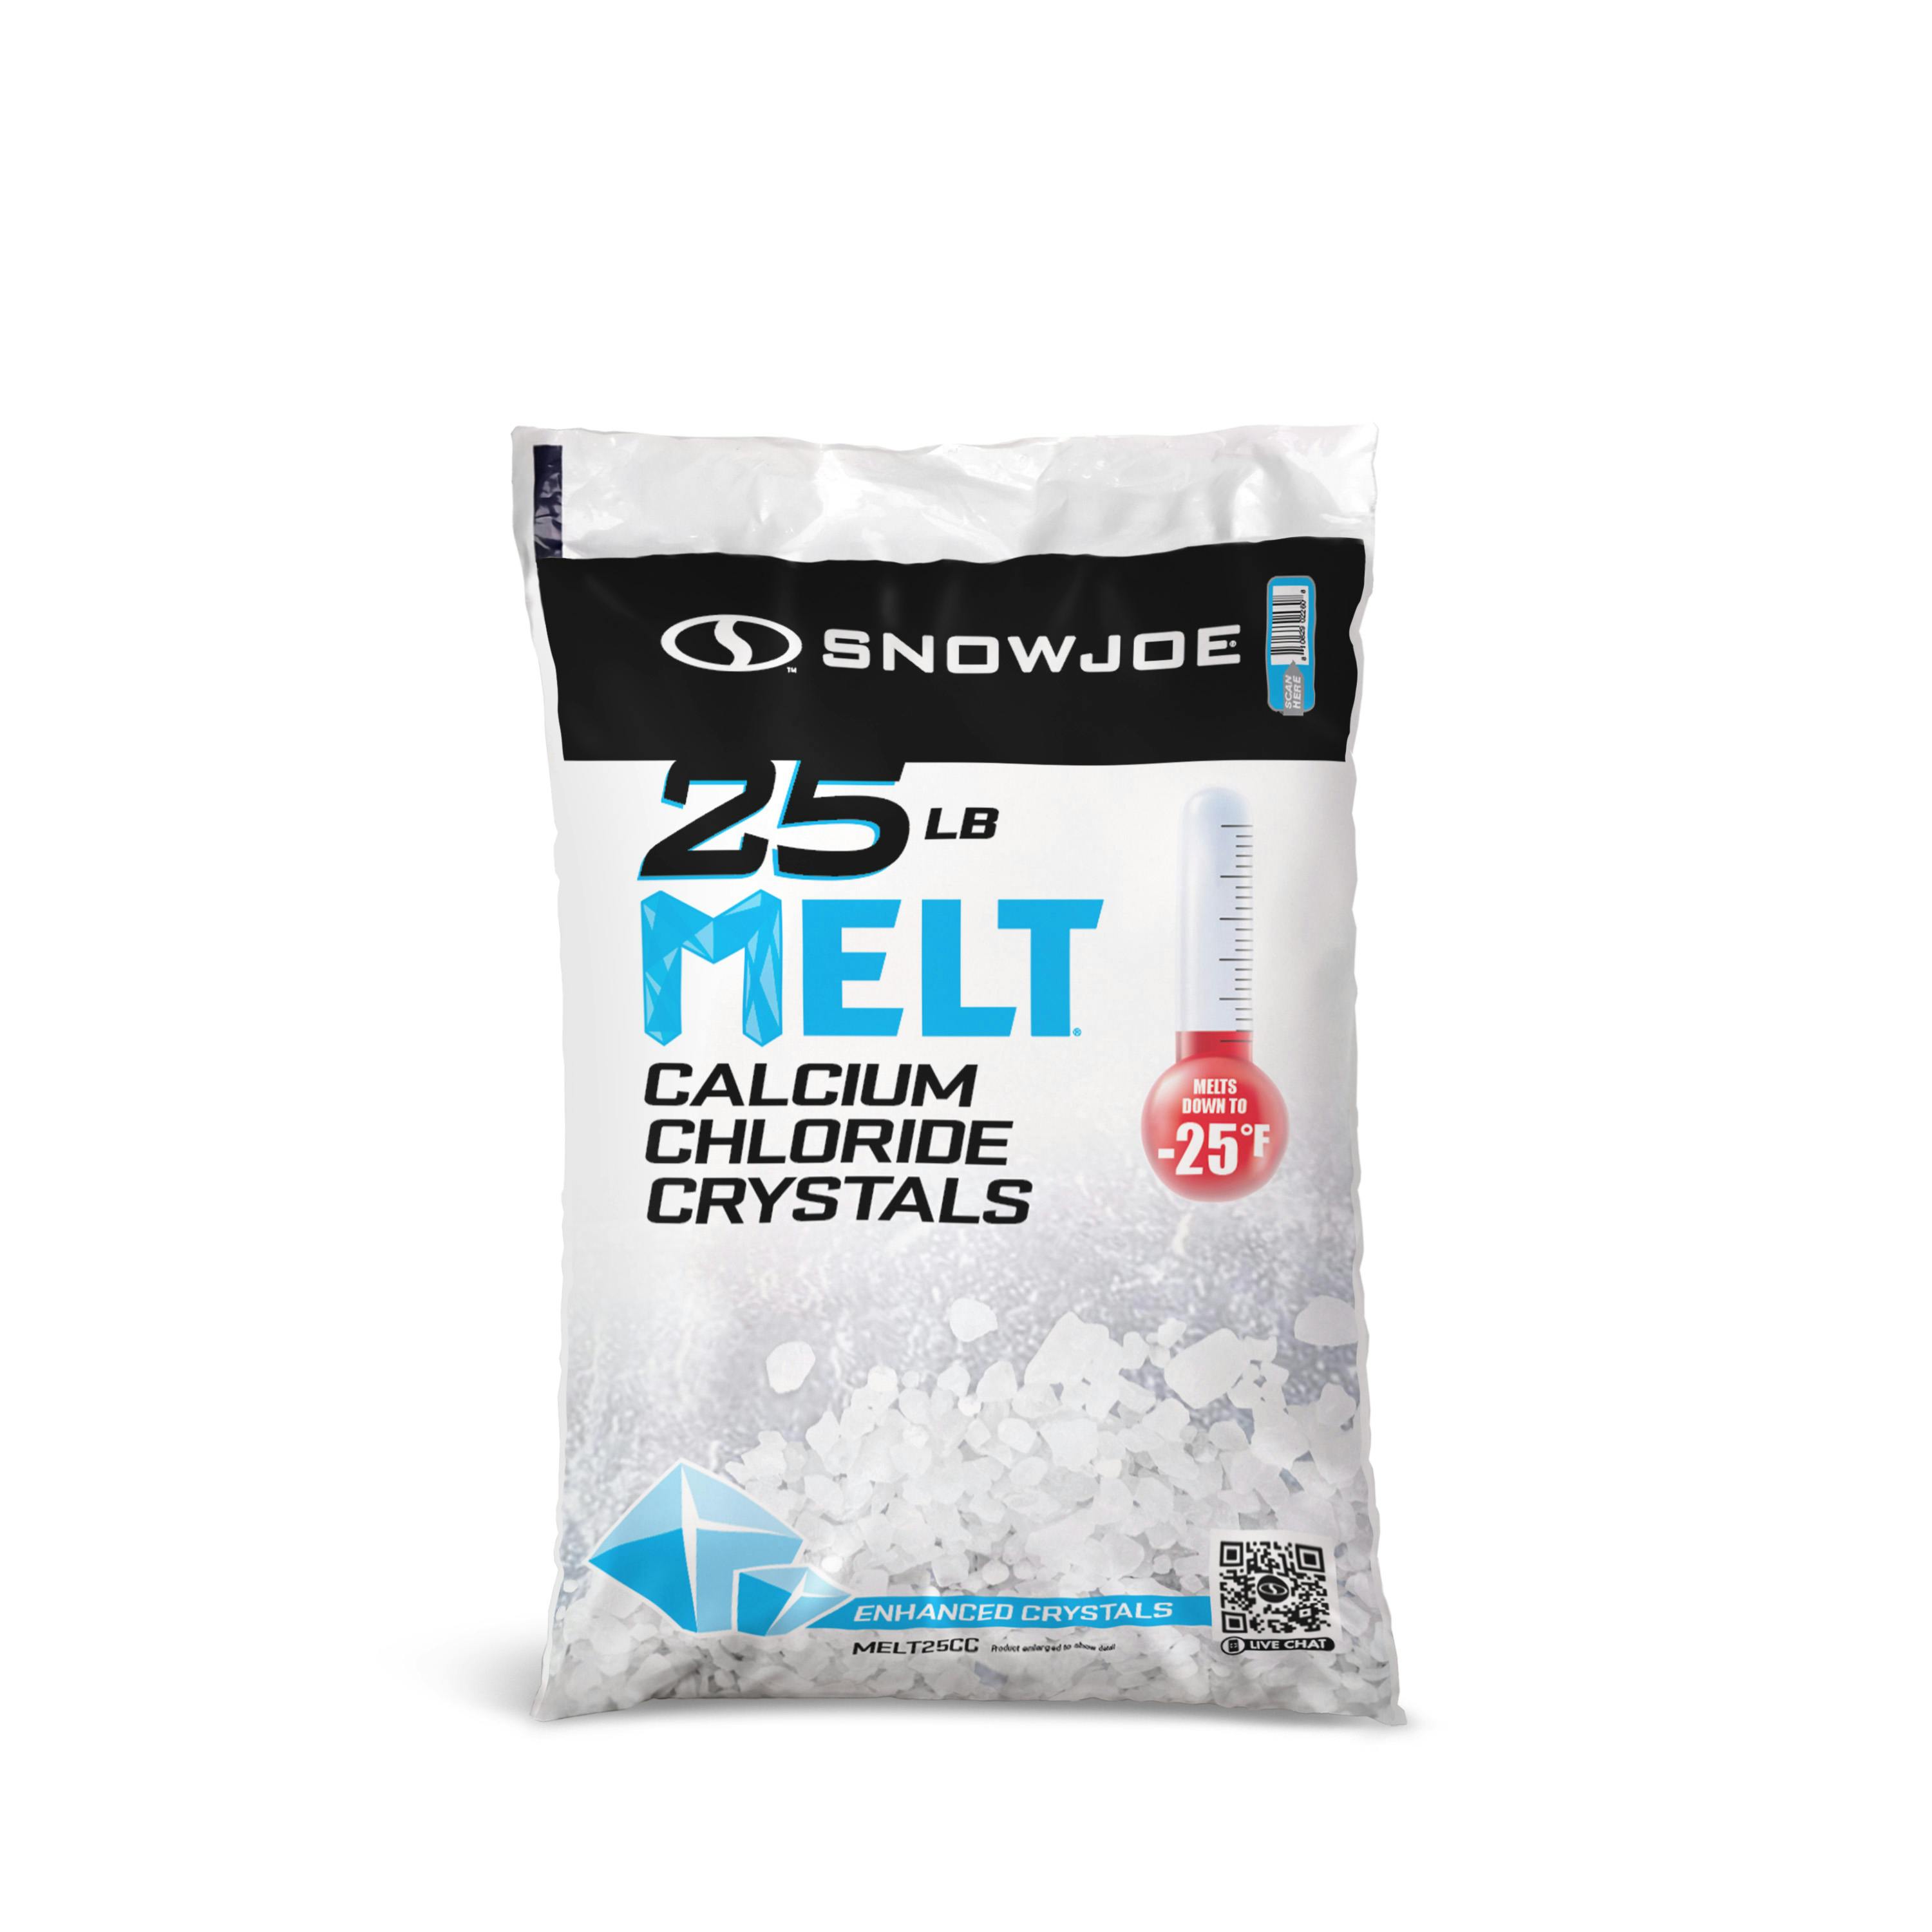 Buy Wholesale China 80-90% Granule Sodium Chloride Snow Melting Salt &  80-90% Granule Sodium Chloride Snow Melting Salt at USD 20